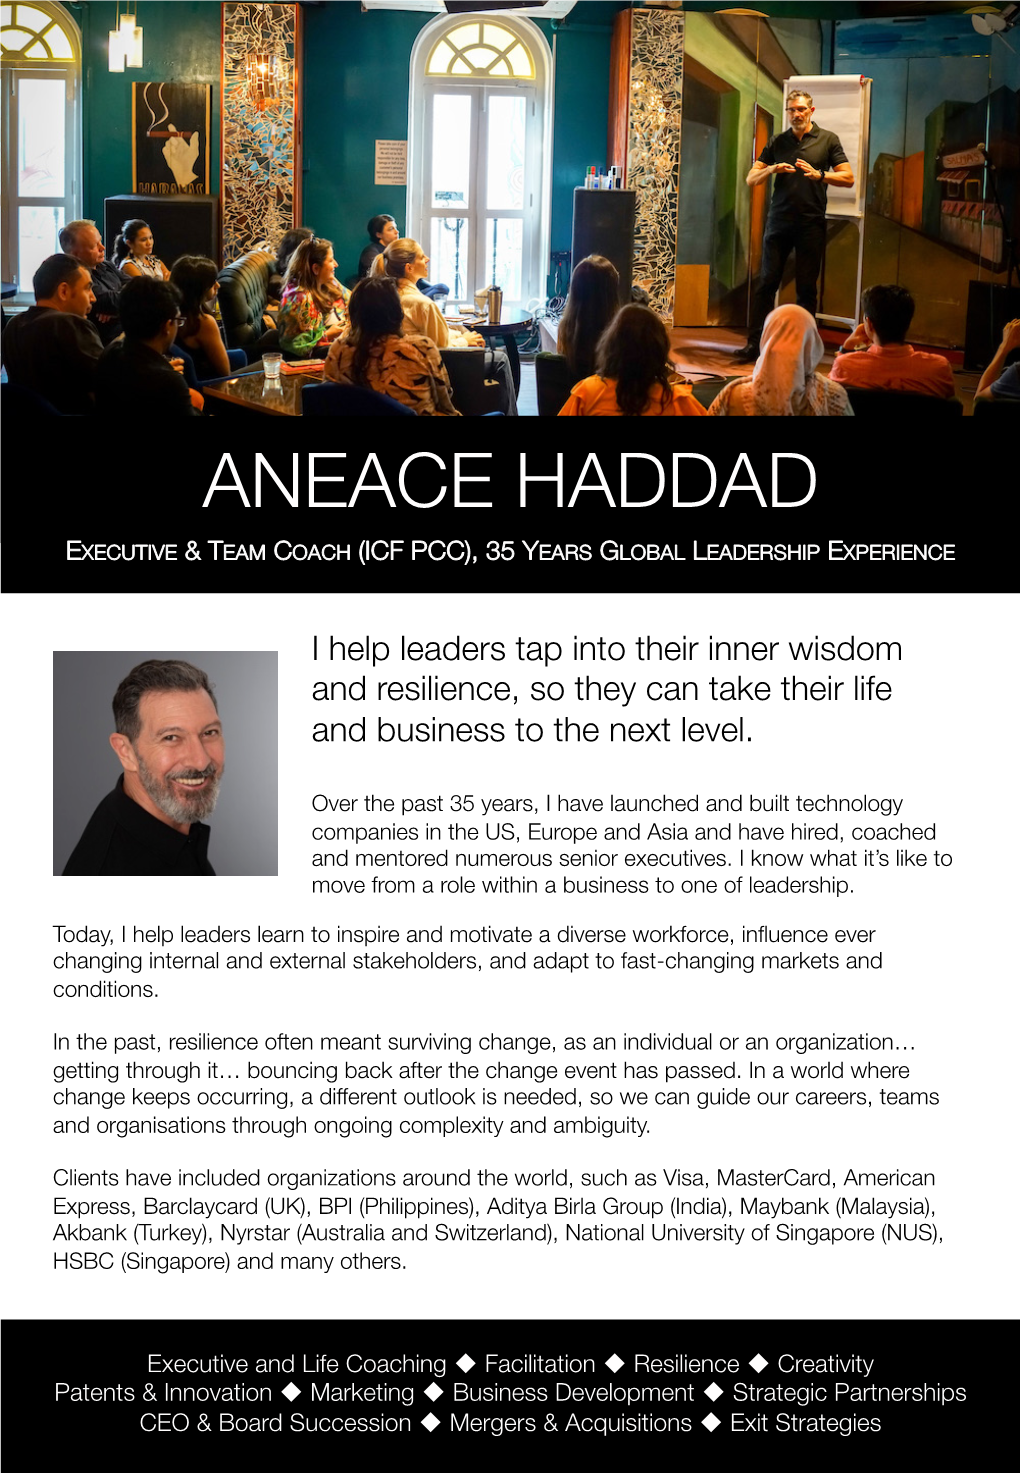 Aneace Haddad Executive & Team Coach (Icf Pcc), 35 Years Global Leadership Experience